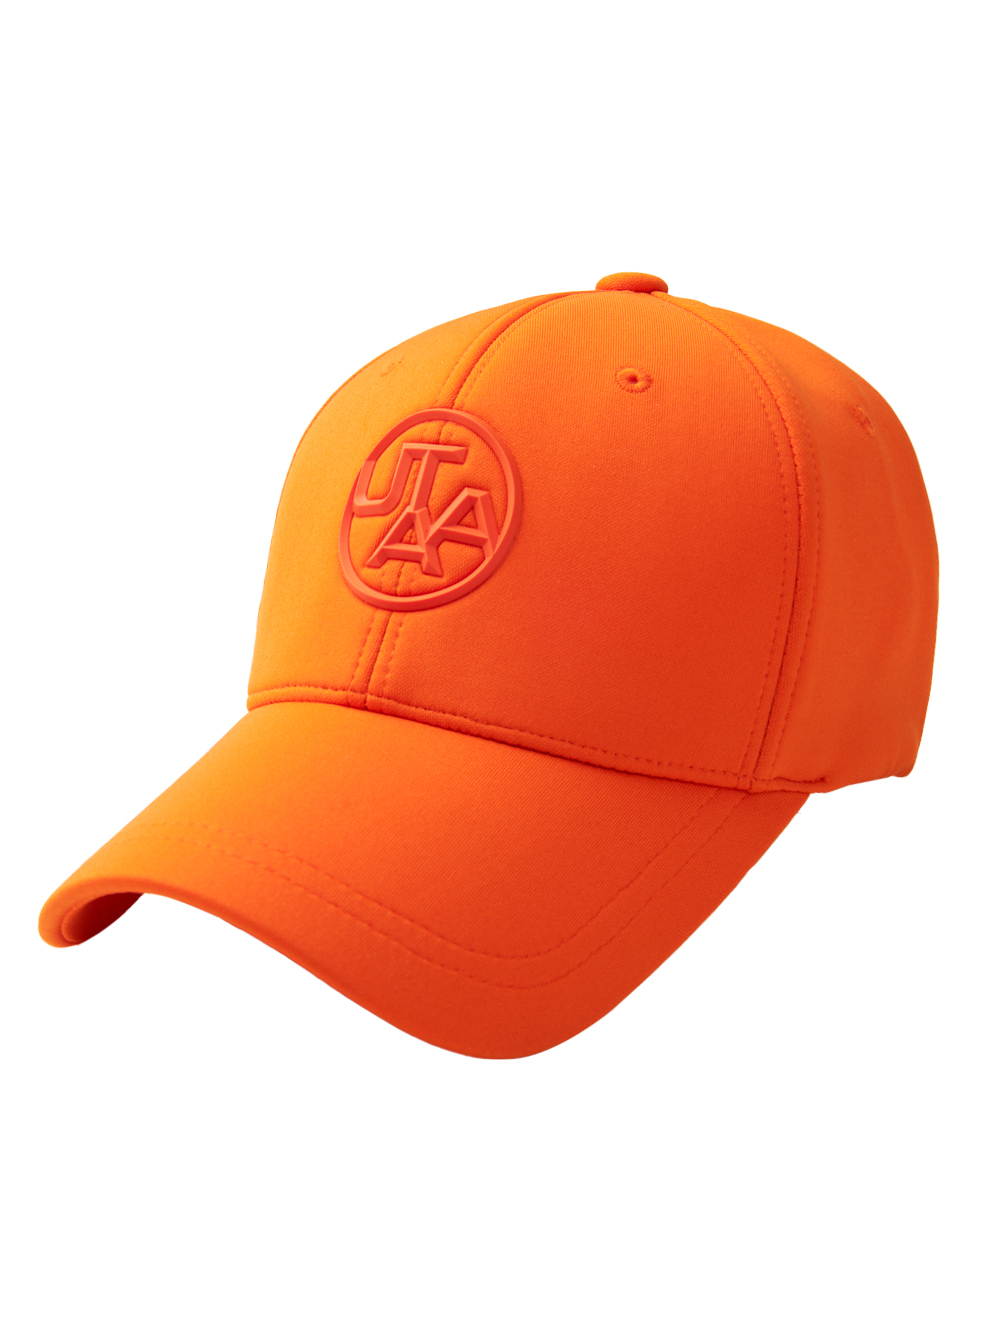 UTAA Figure Symbol Color Cap : Orange (UC0GCU530OR)